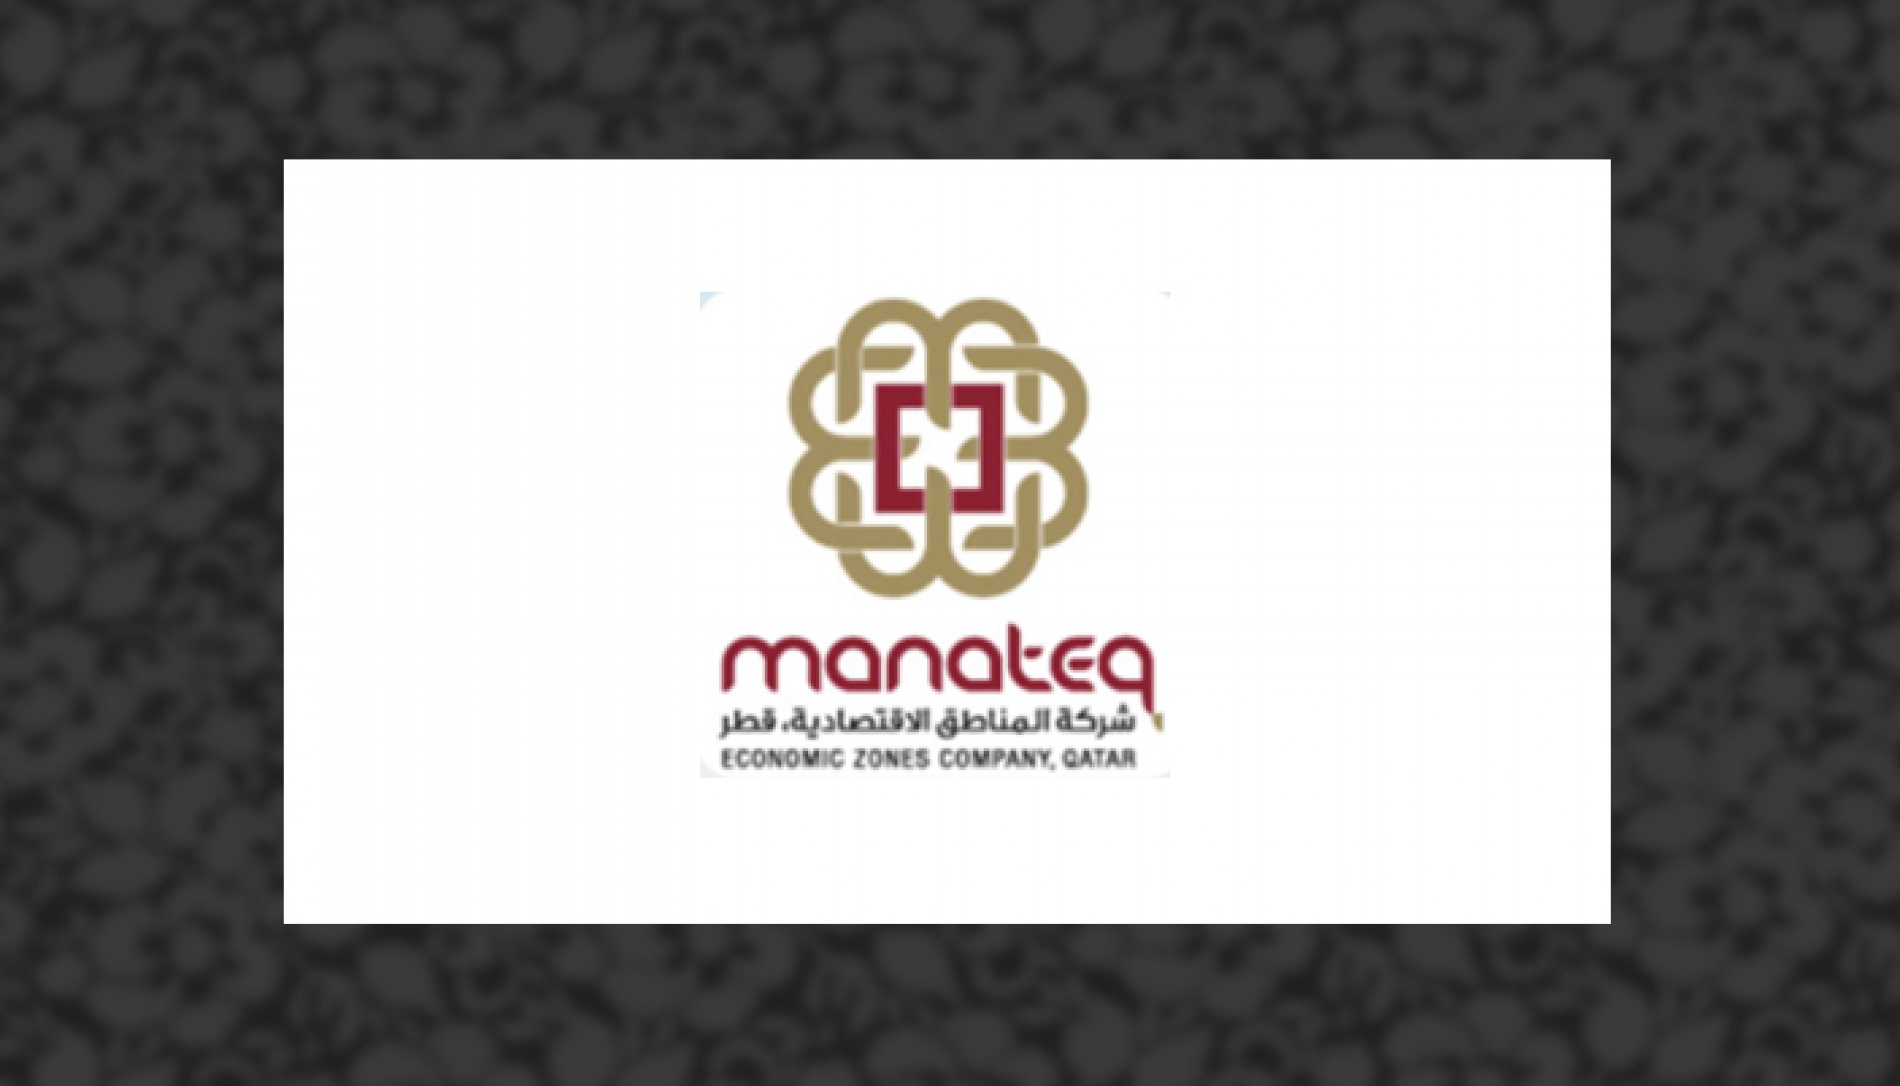 Manateq Economic Zone Company